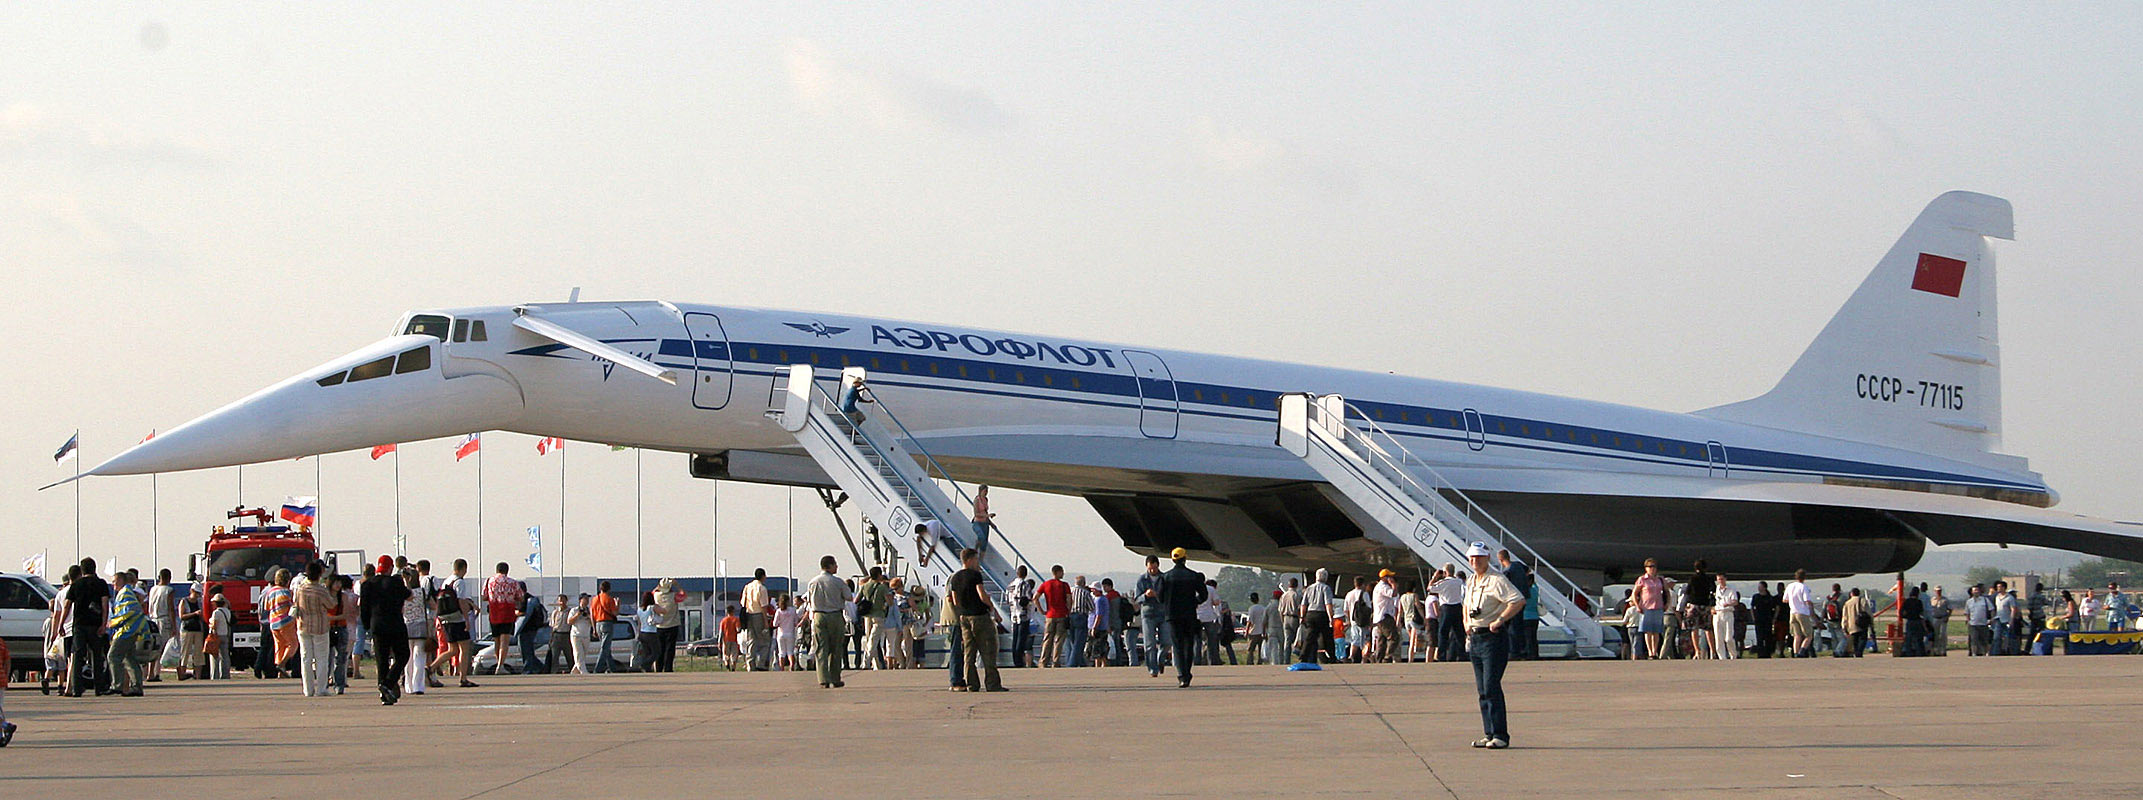 Ту-144 пассажирский самолёт